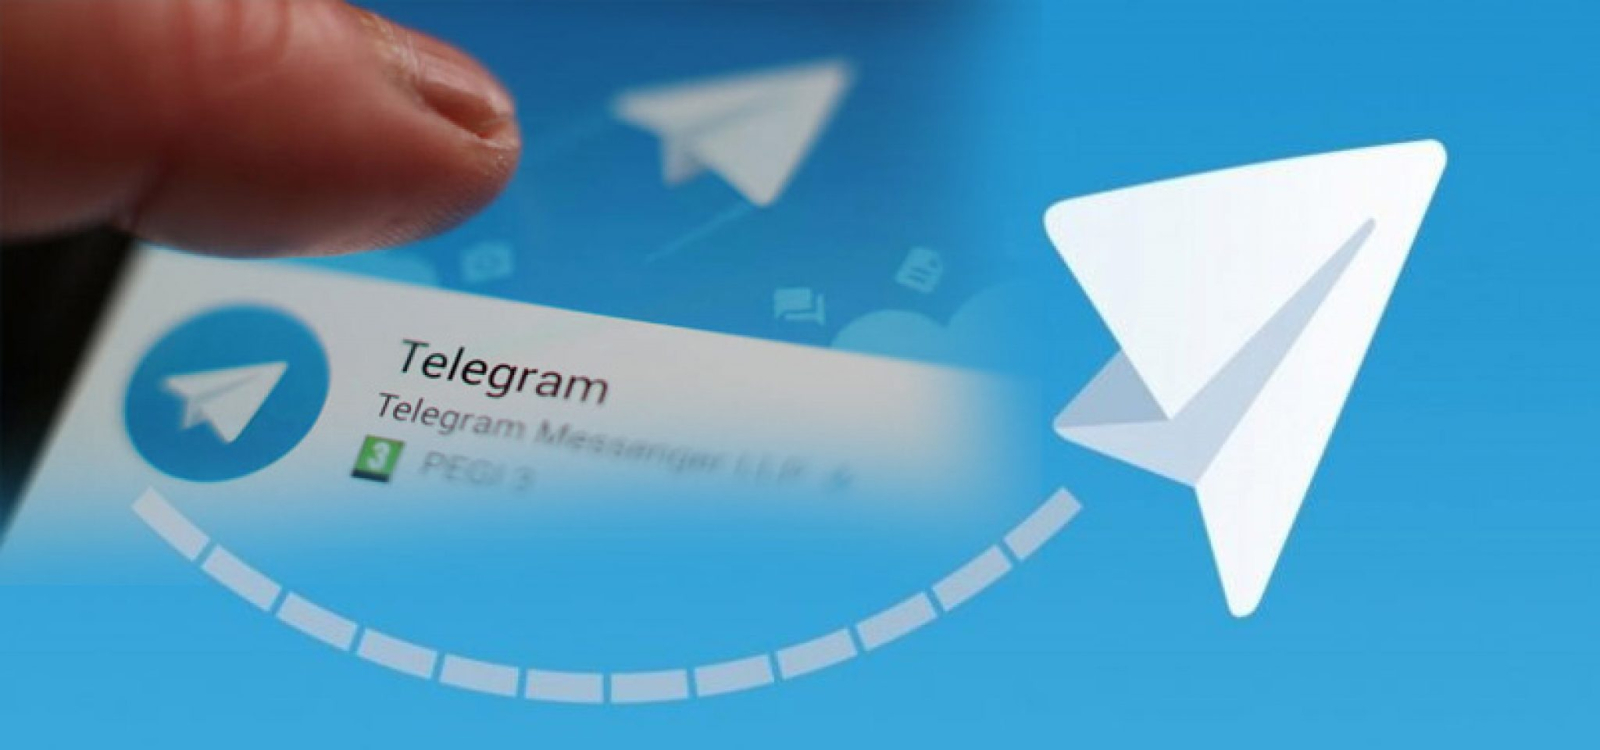 Регистрация в телеграмм на русском онлайн без номера телефона фото 75